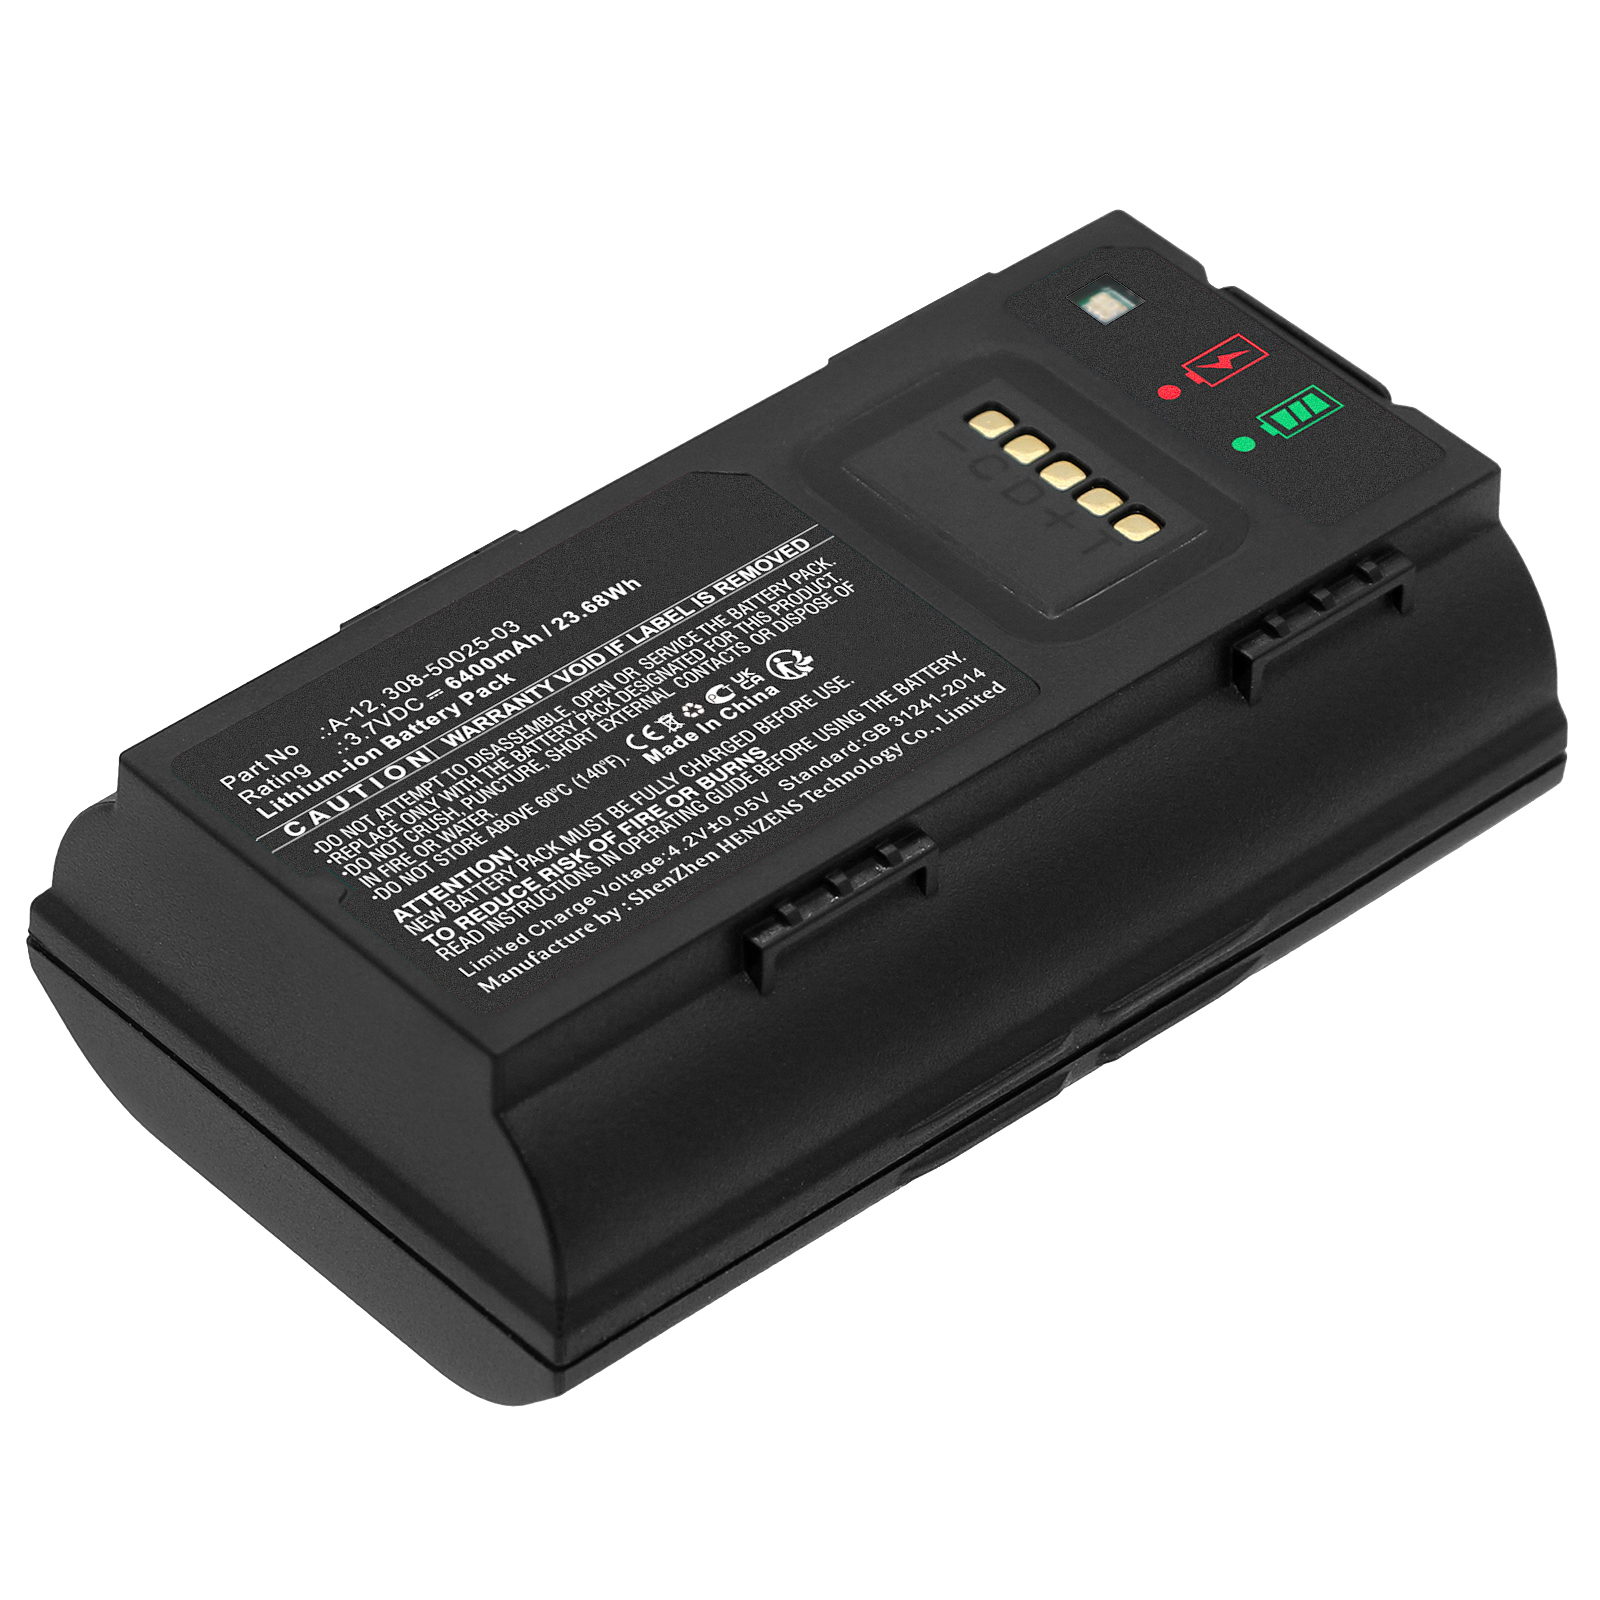 Synergy Digital Home Security Camera Battery, Compatible with Arlo 308-50025-03 Home Security Camera Battery (Li-ion, 3.7V, 6400mAh)